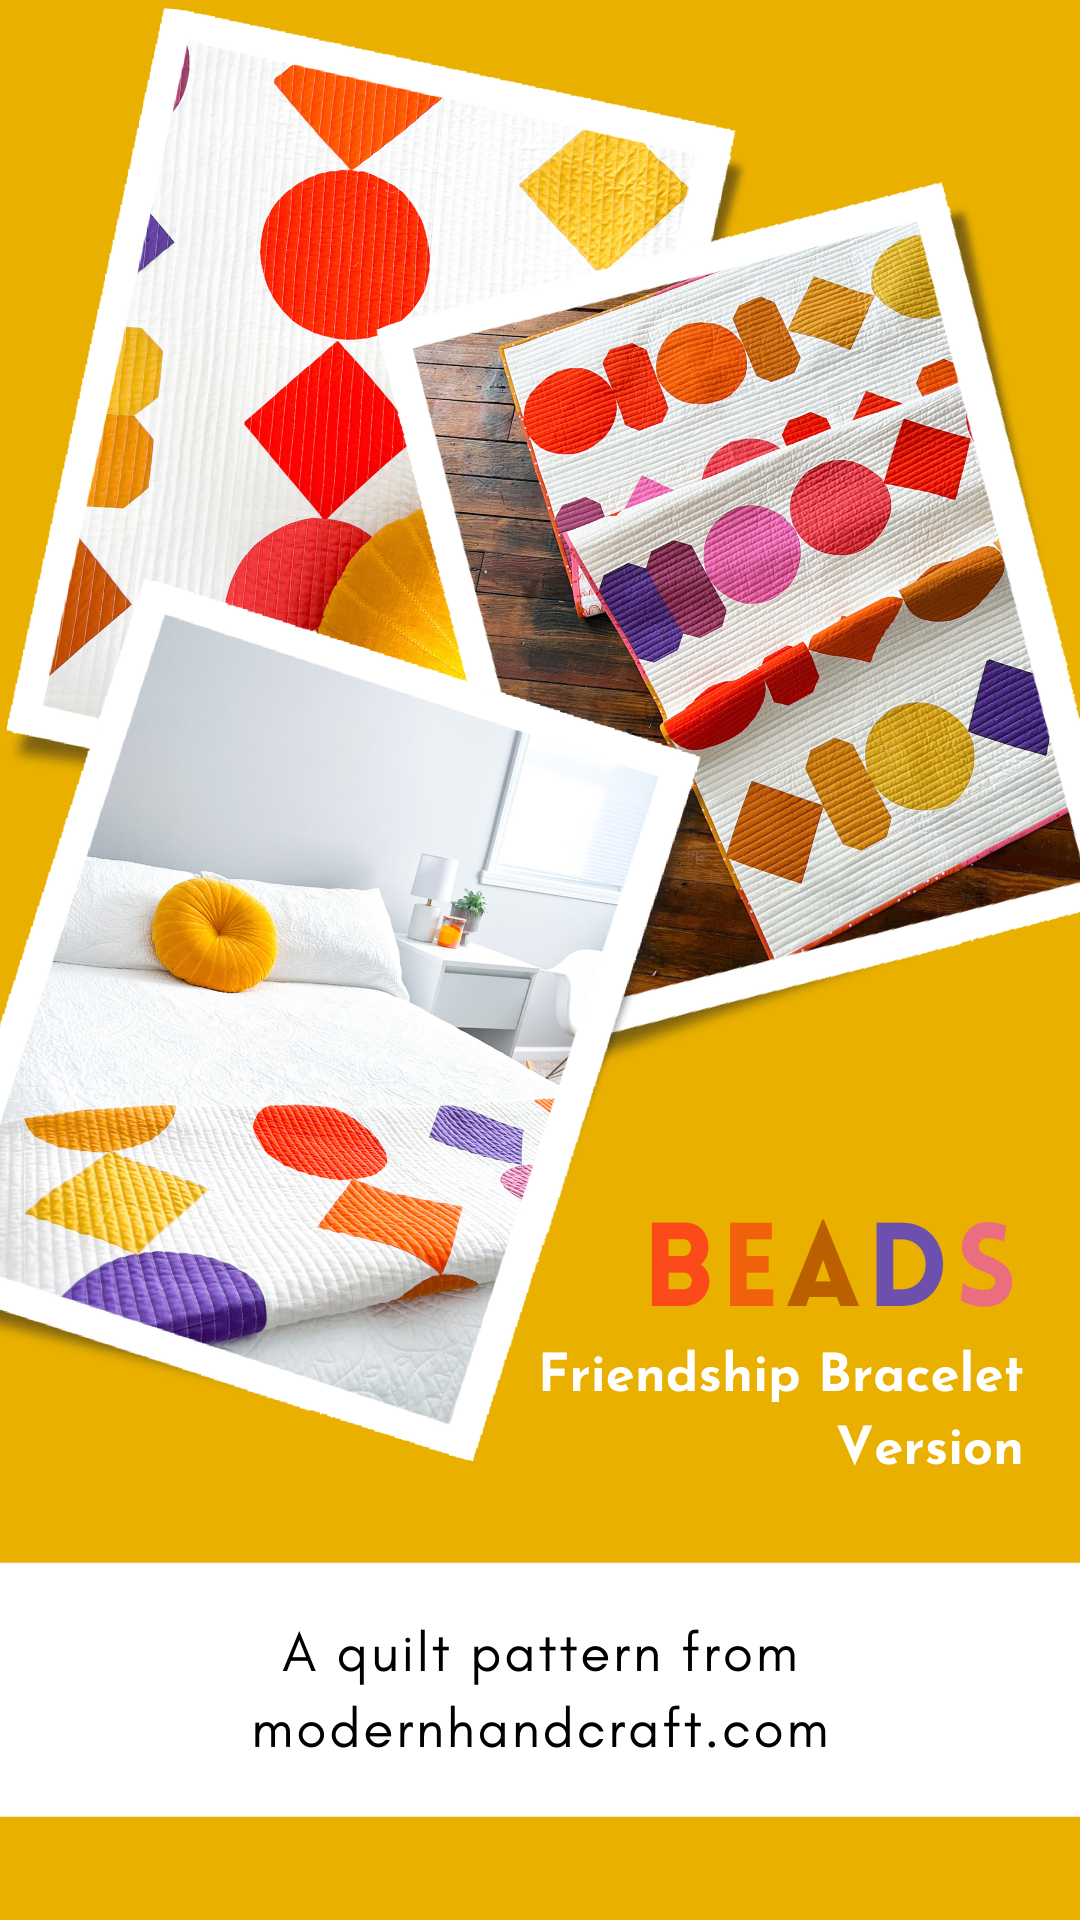 Beads Quilt / Friendship Bracelet Version - Modernhandcraft.com